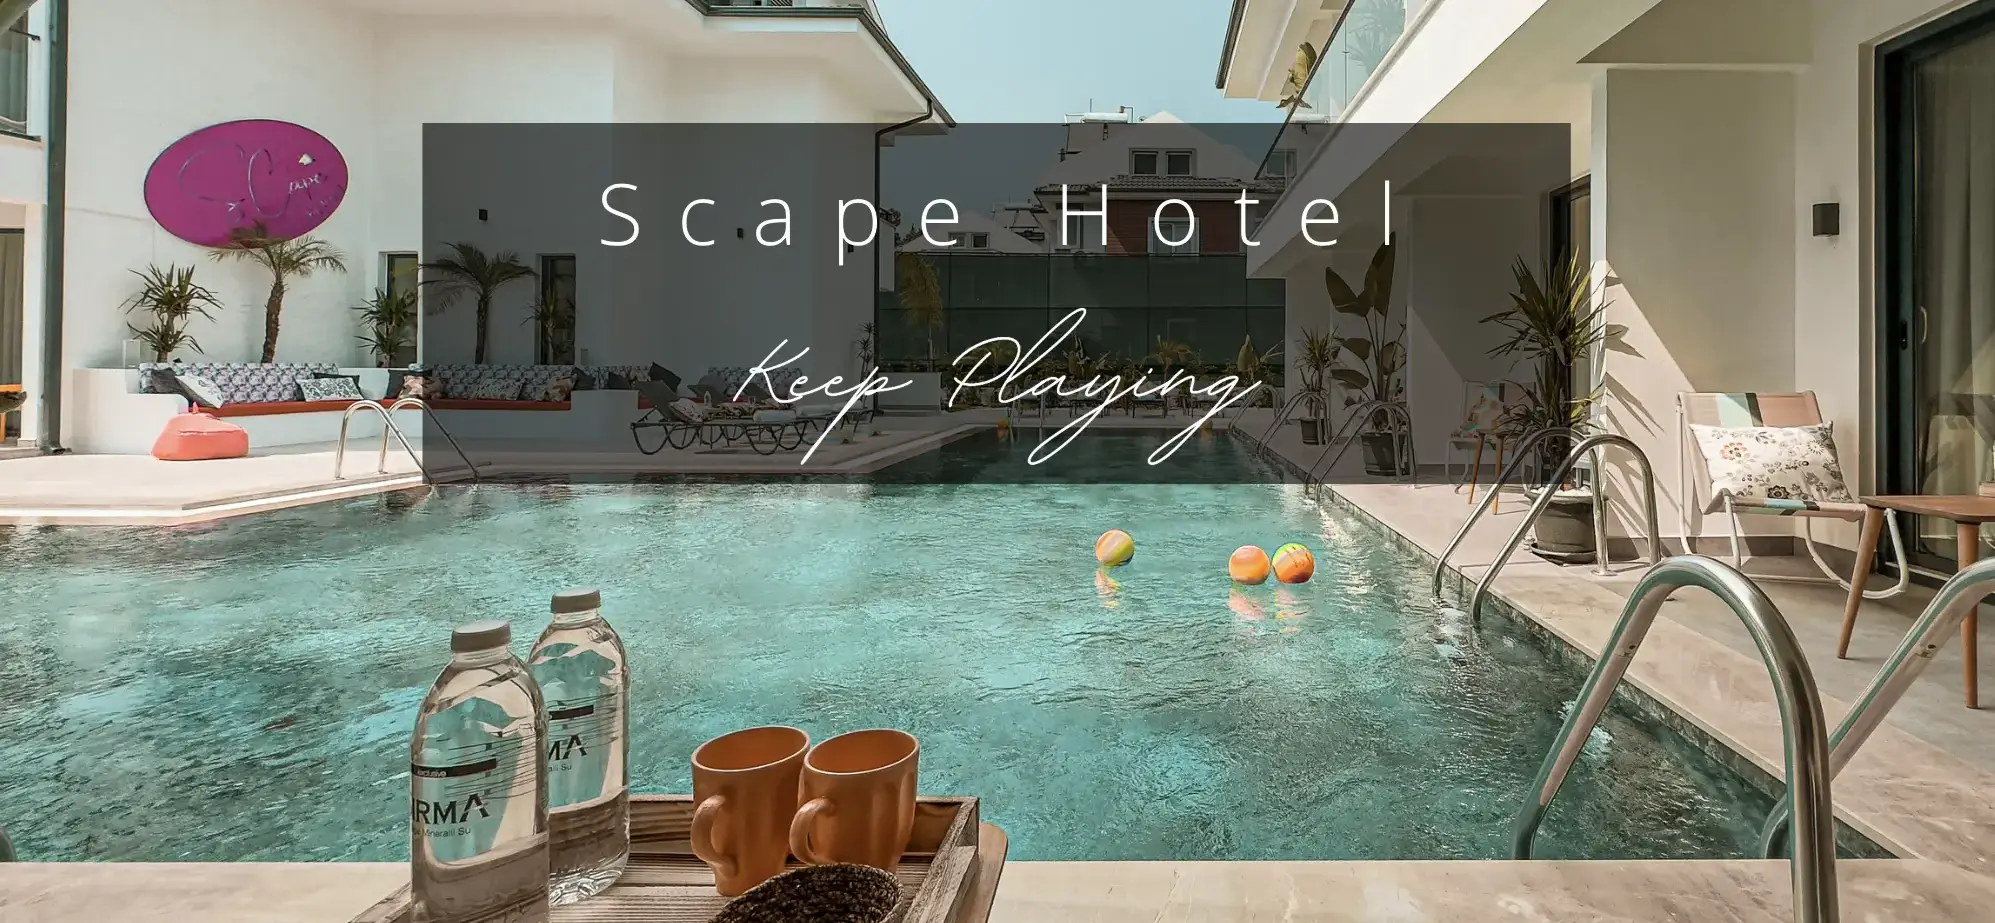 Scape hotel website header